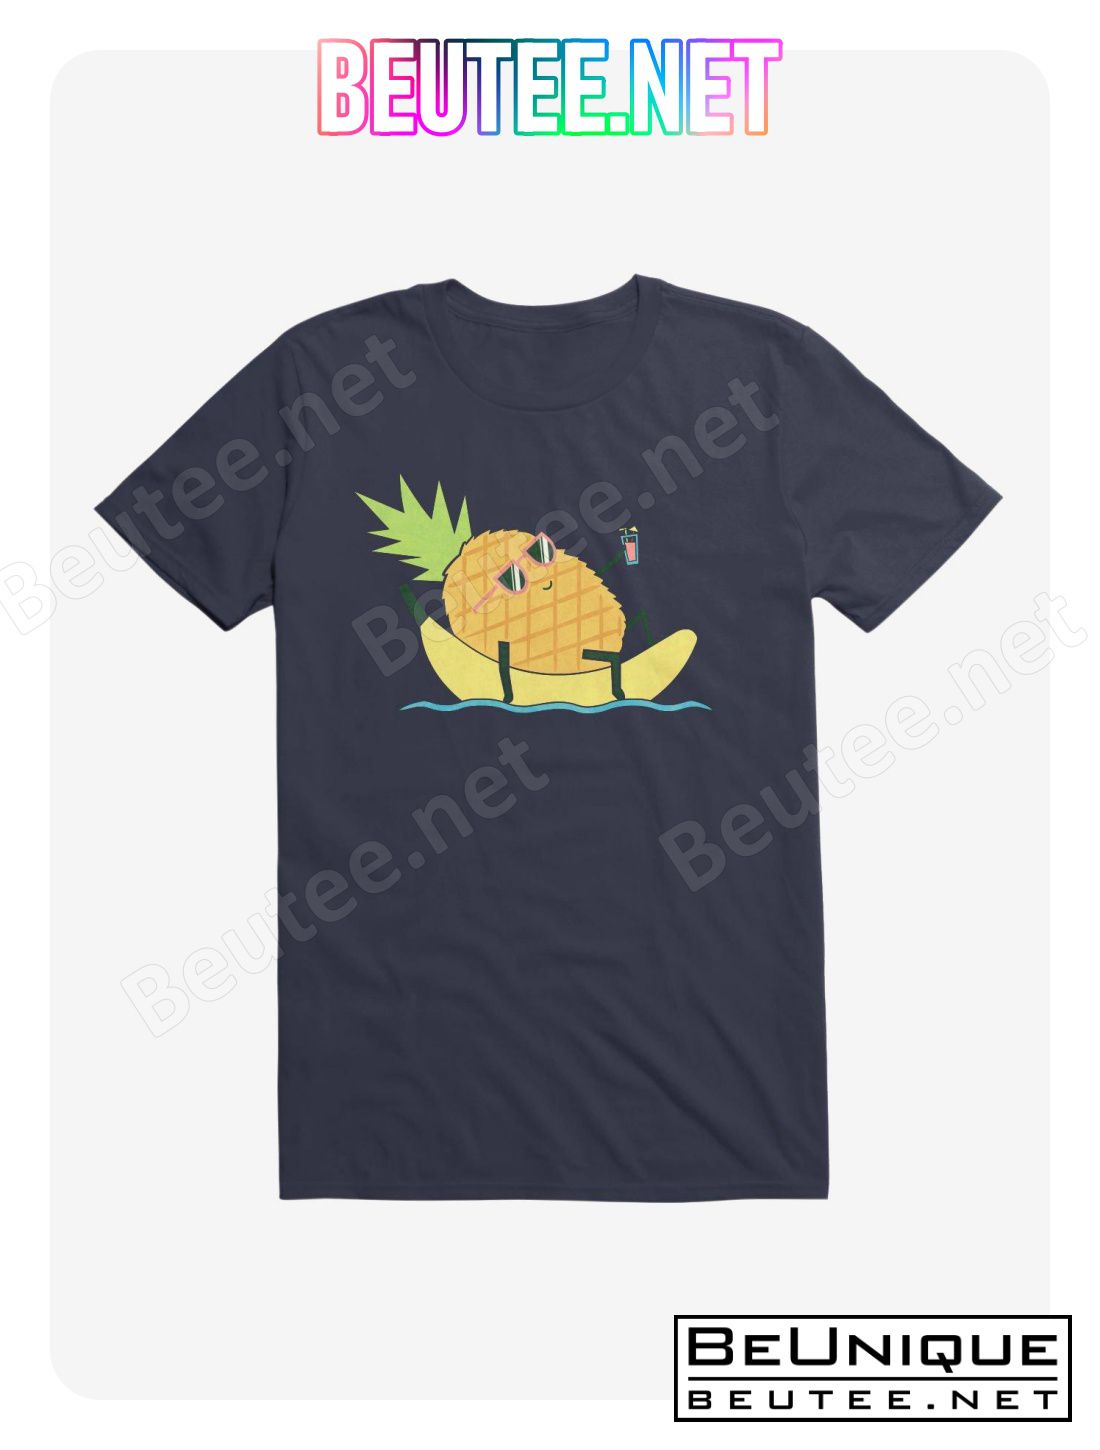 Summer Pineapple Chilling Navy Blue T-Shirt